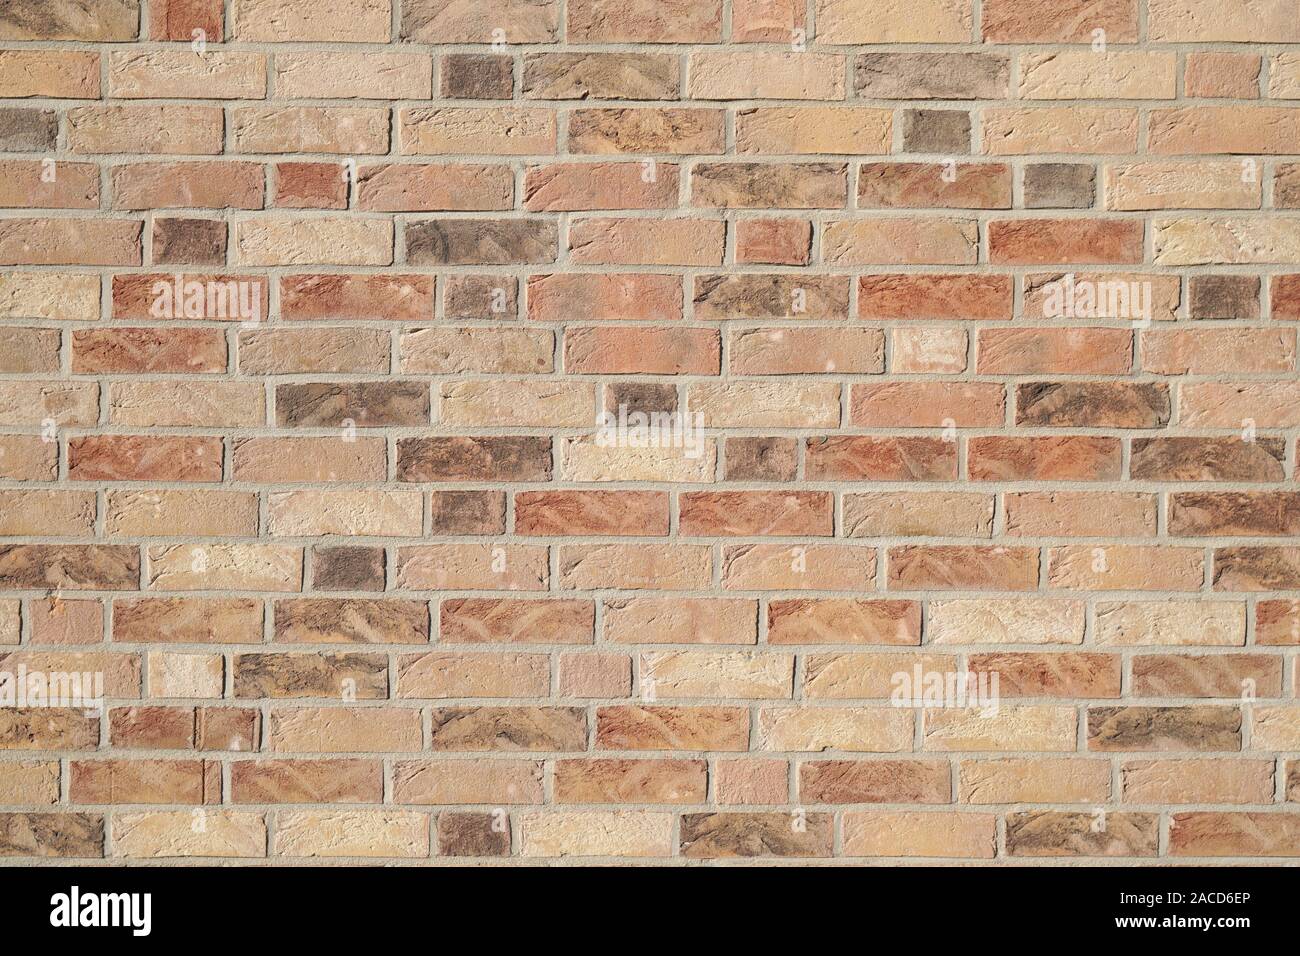 brown clinker brick wall background - modern building facade Stock Photo